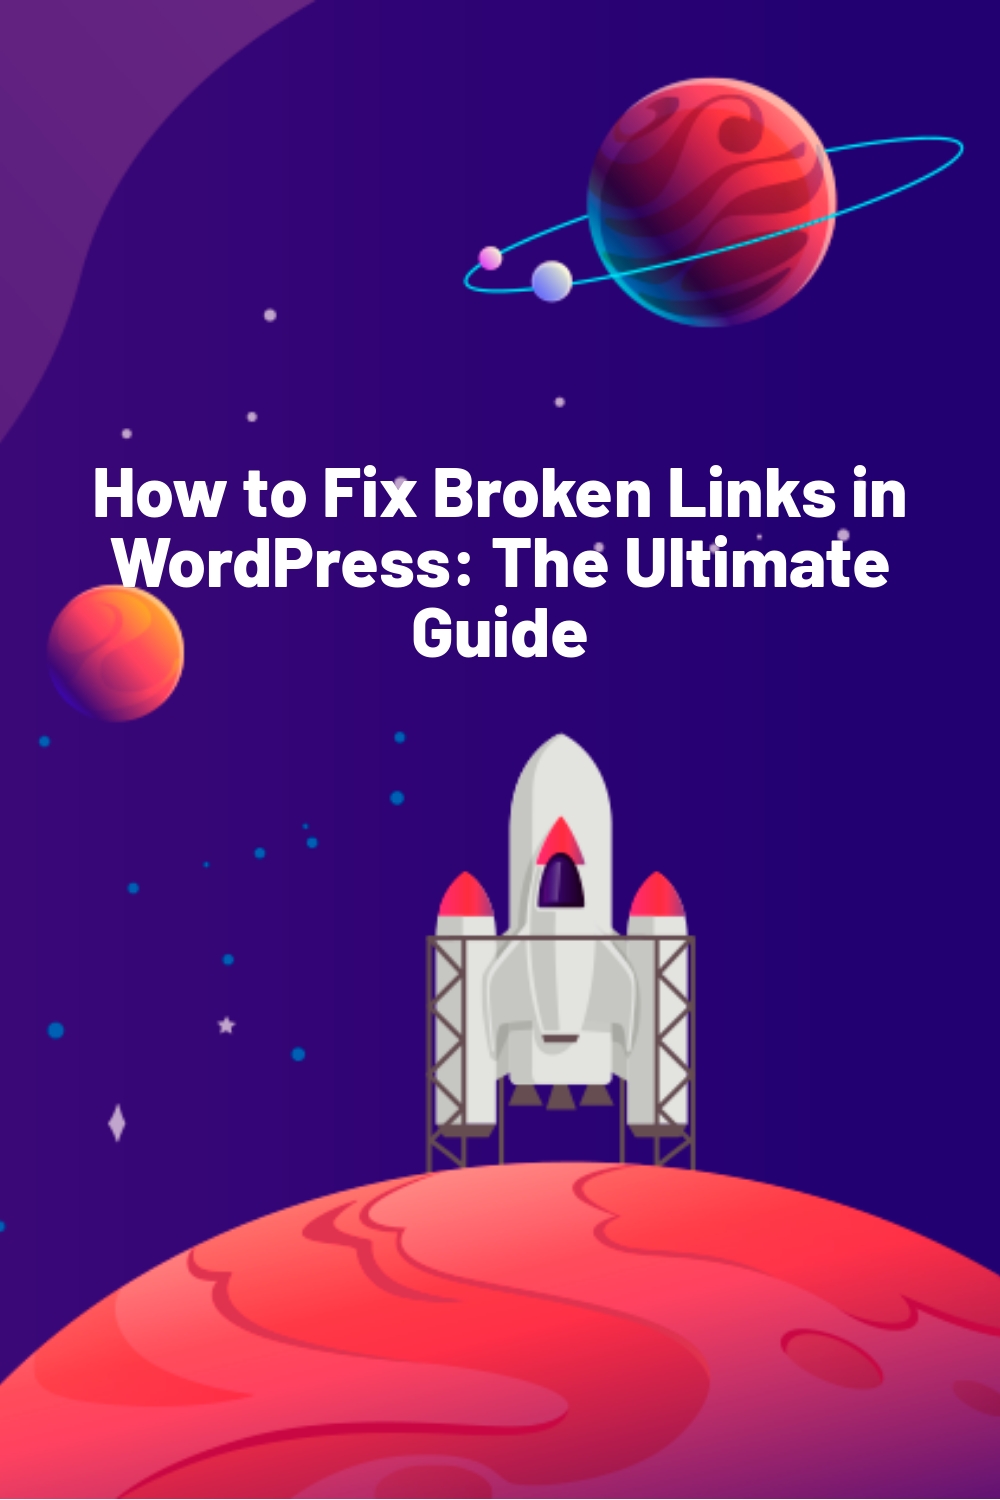 How to Fix Broken Links in WordPress: The Ultimate Guide